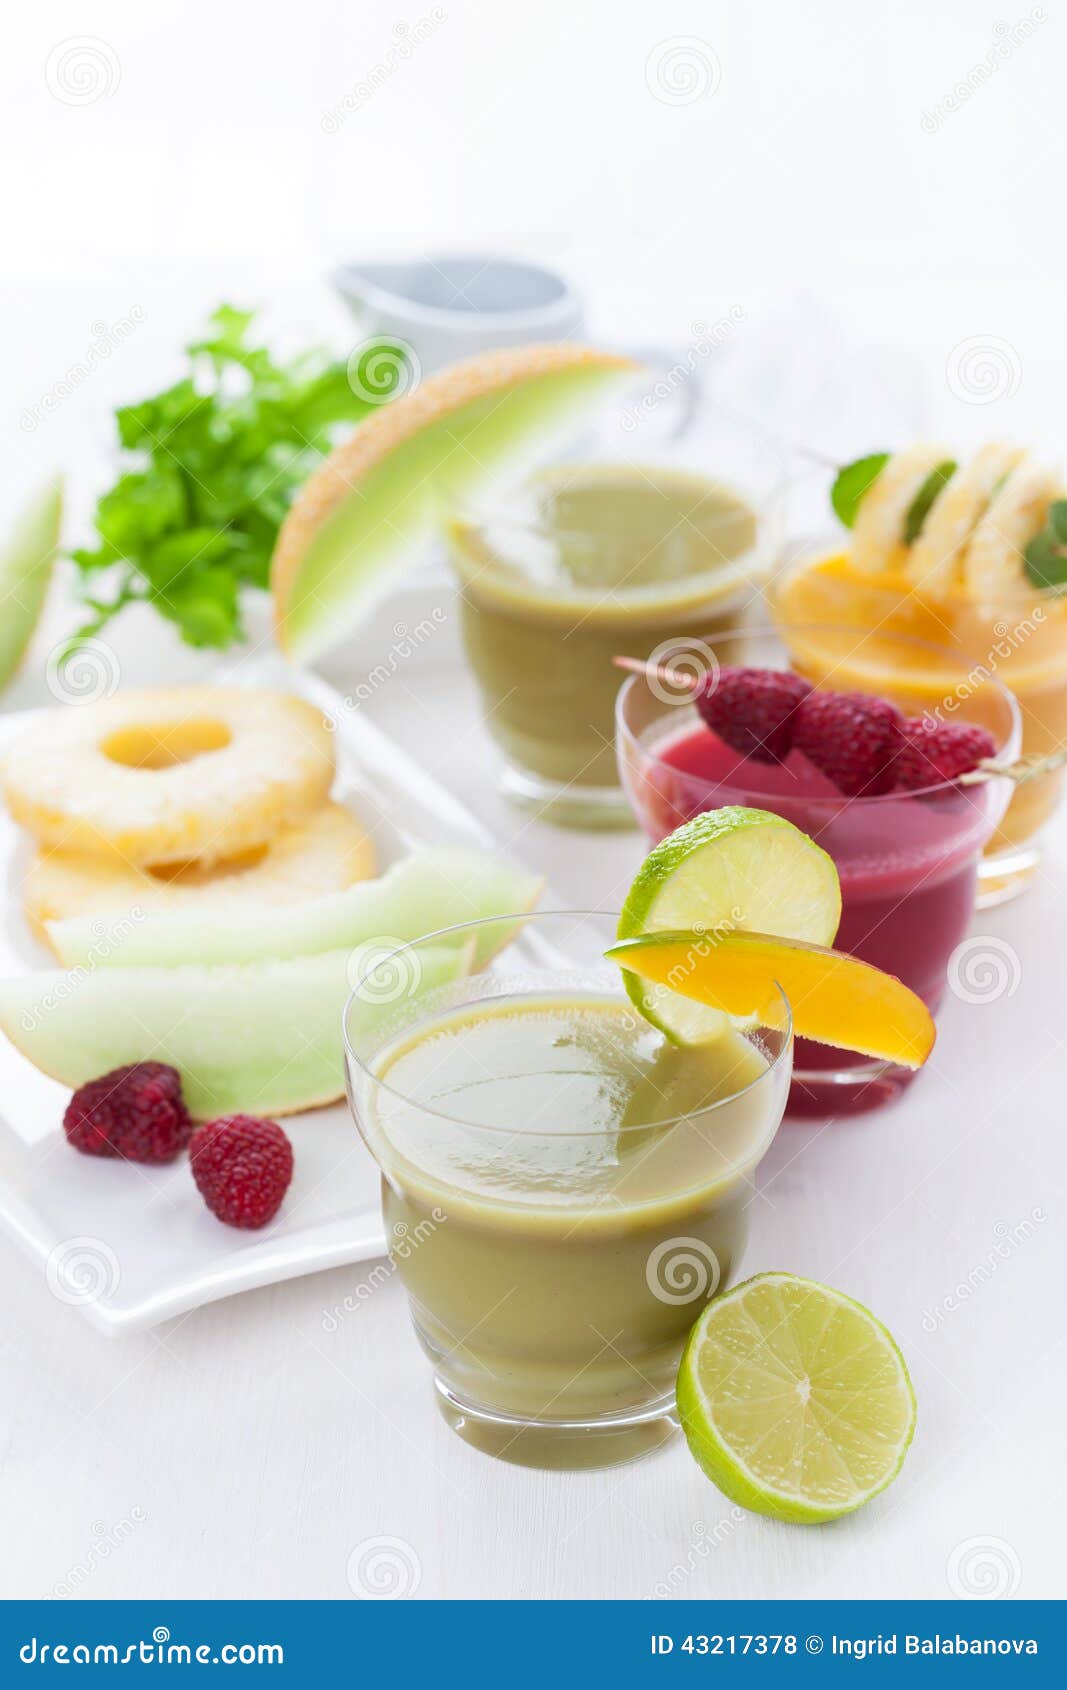 Variation of Fruit and Vegetable Smoothies Stock Photo - Image of mango ...